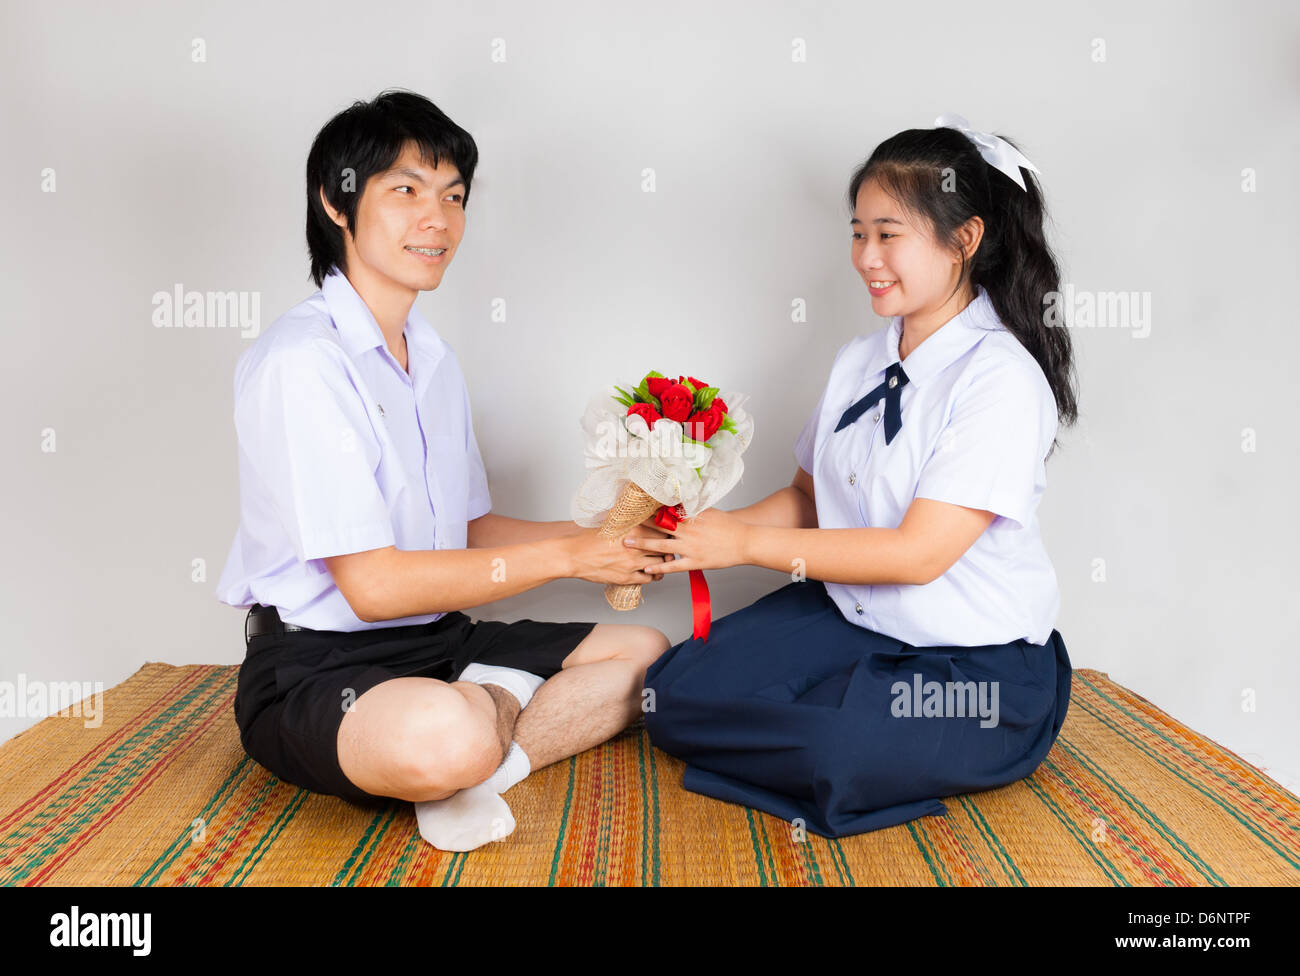 Boyfriend gives flower to girlfriend Stock Photo